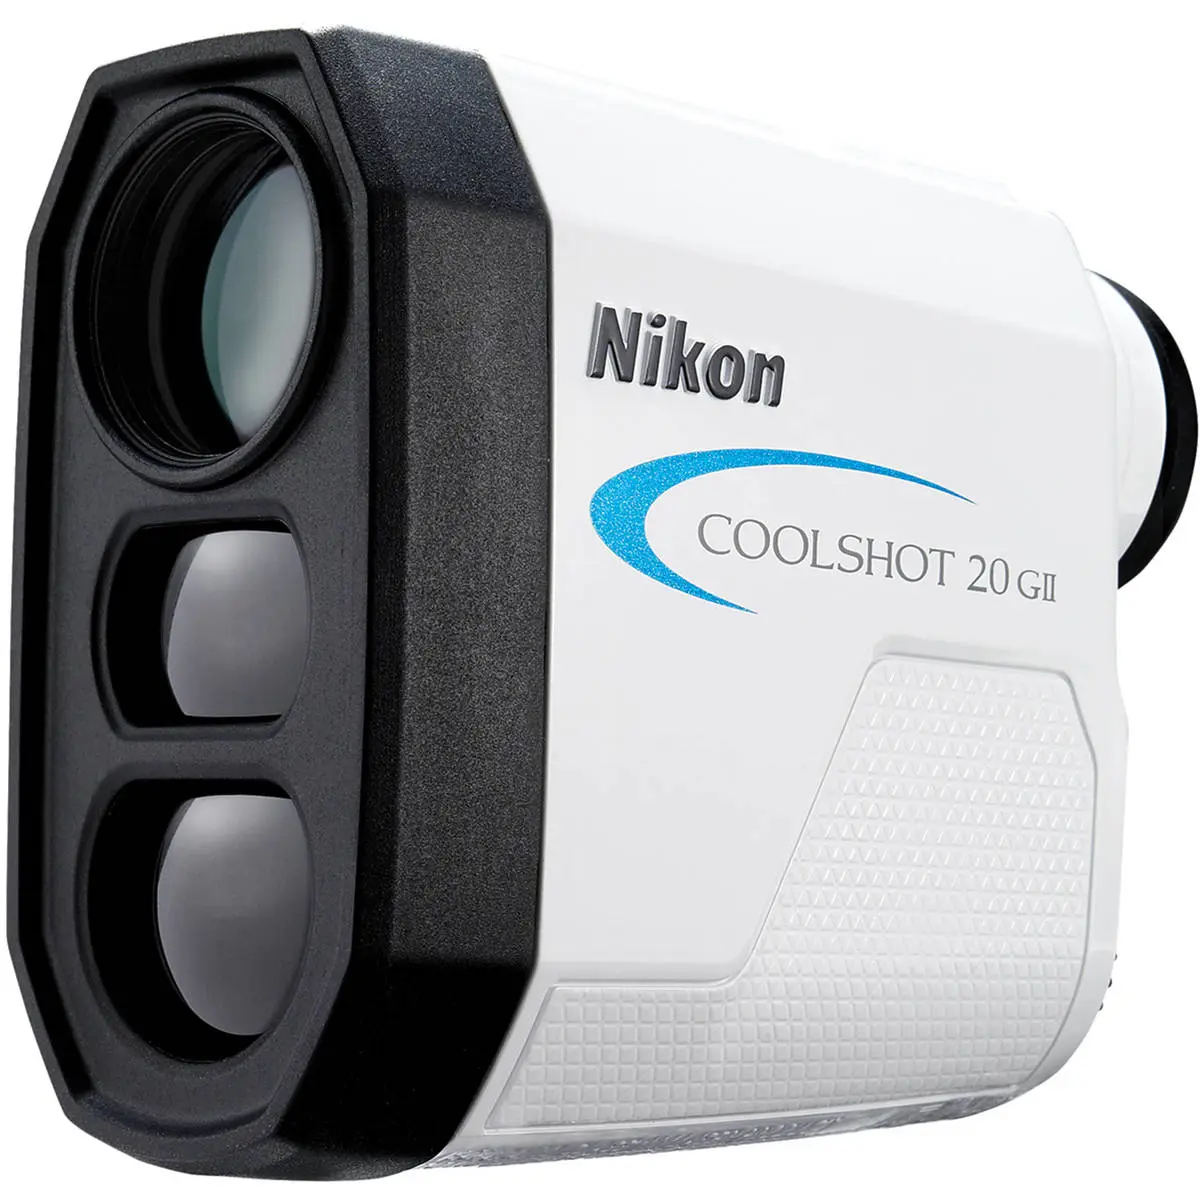 Main Image Nikon Coolshot 20 GII 6x20 Golf Laser Rangefinder